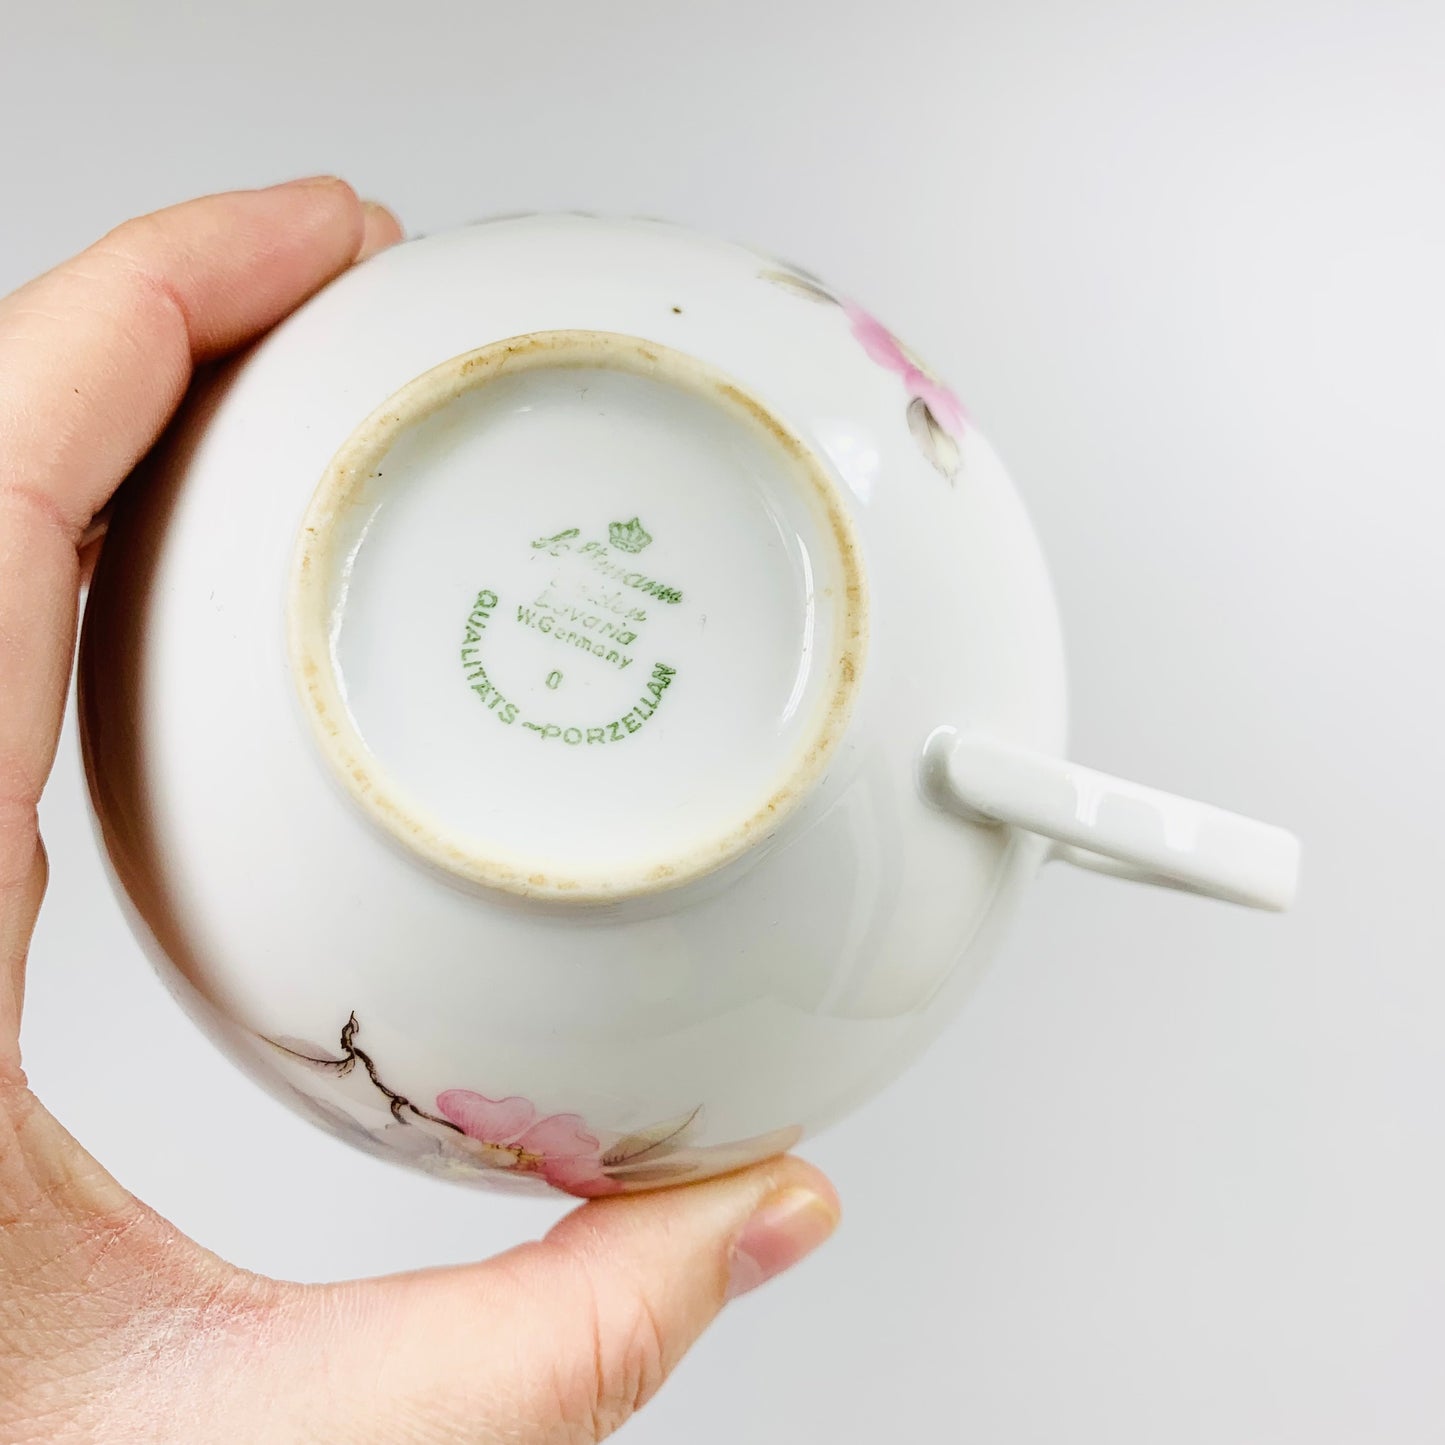 West German porcelain tea cup and matching saucer